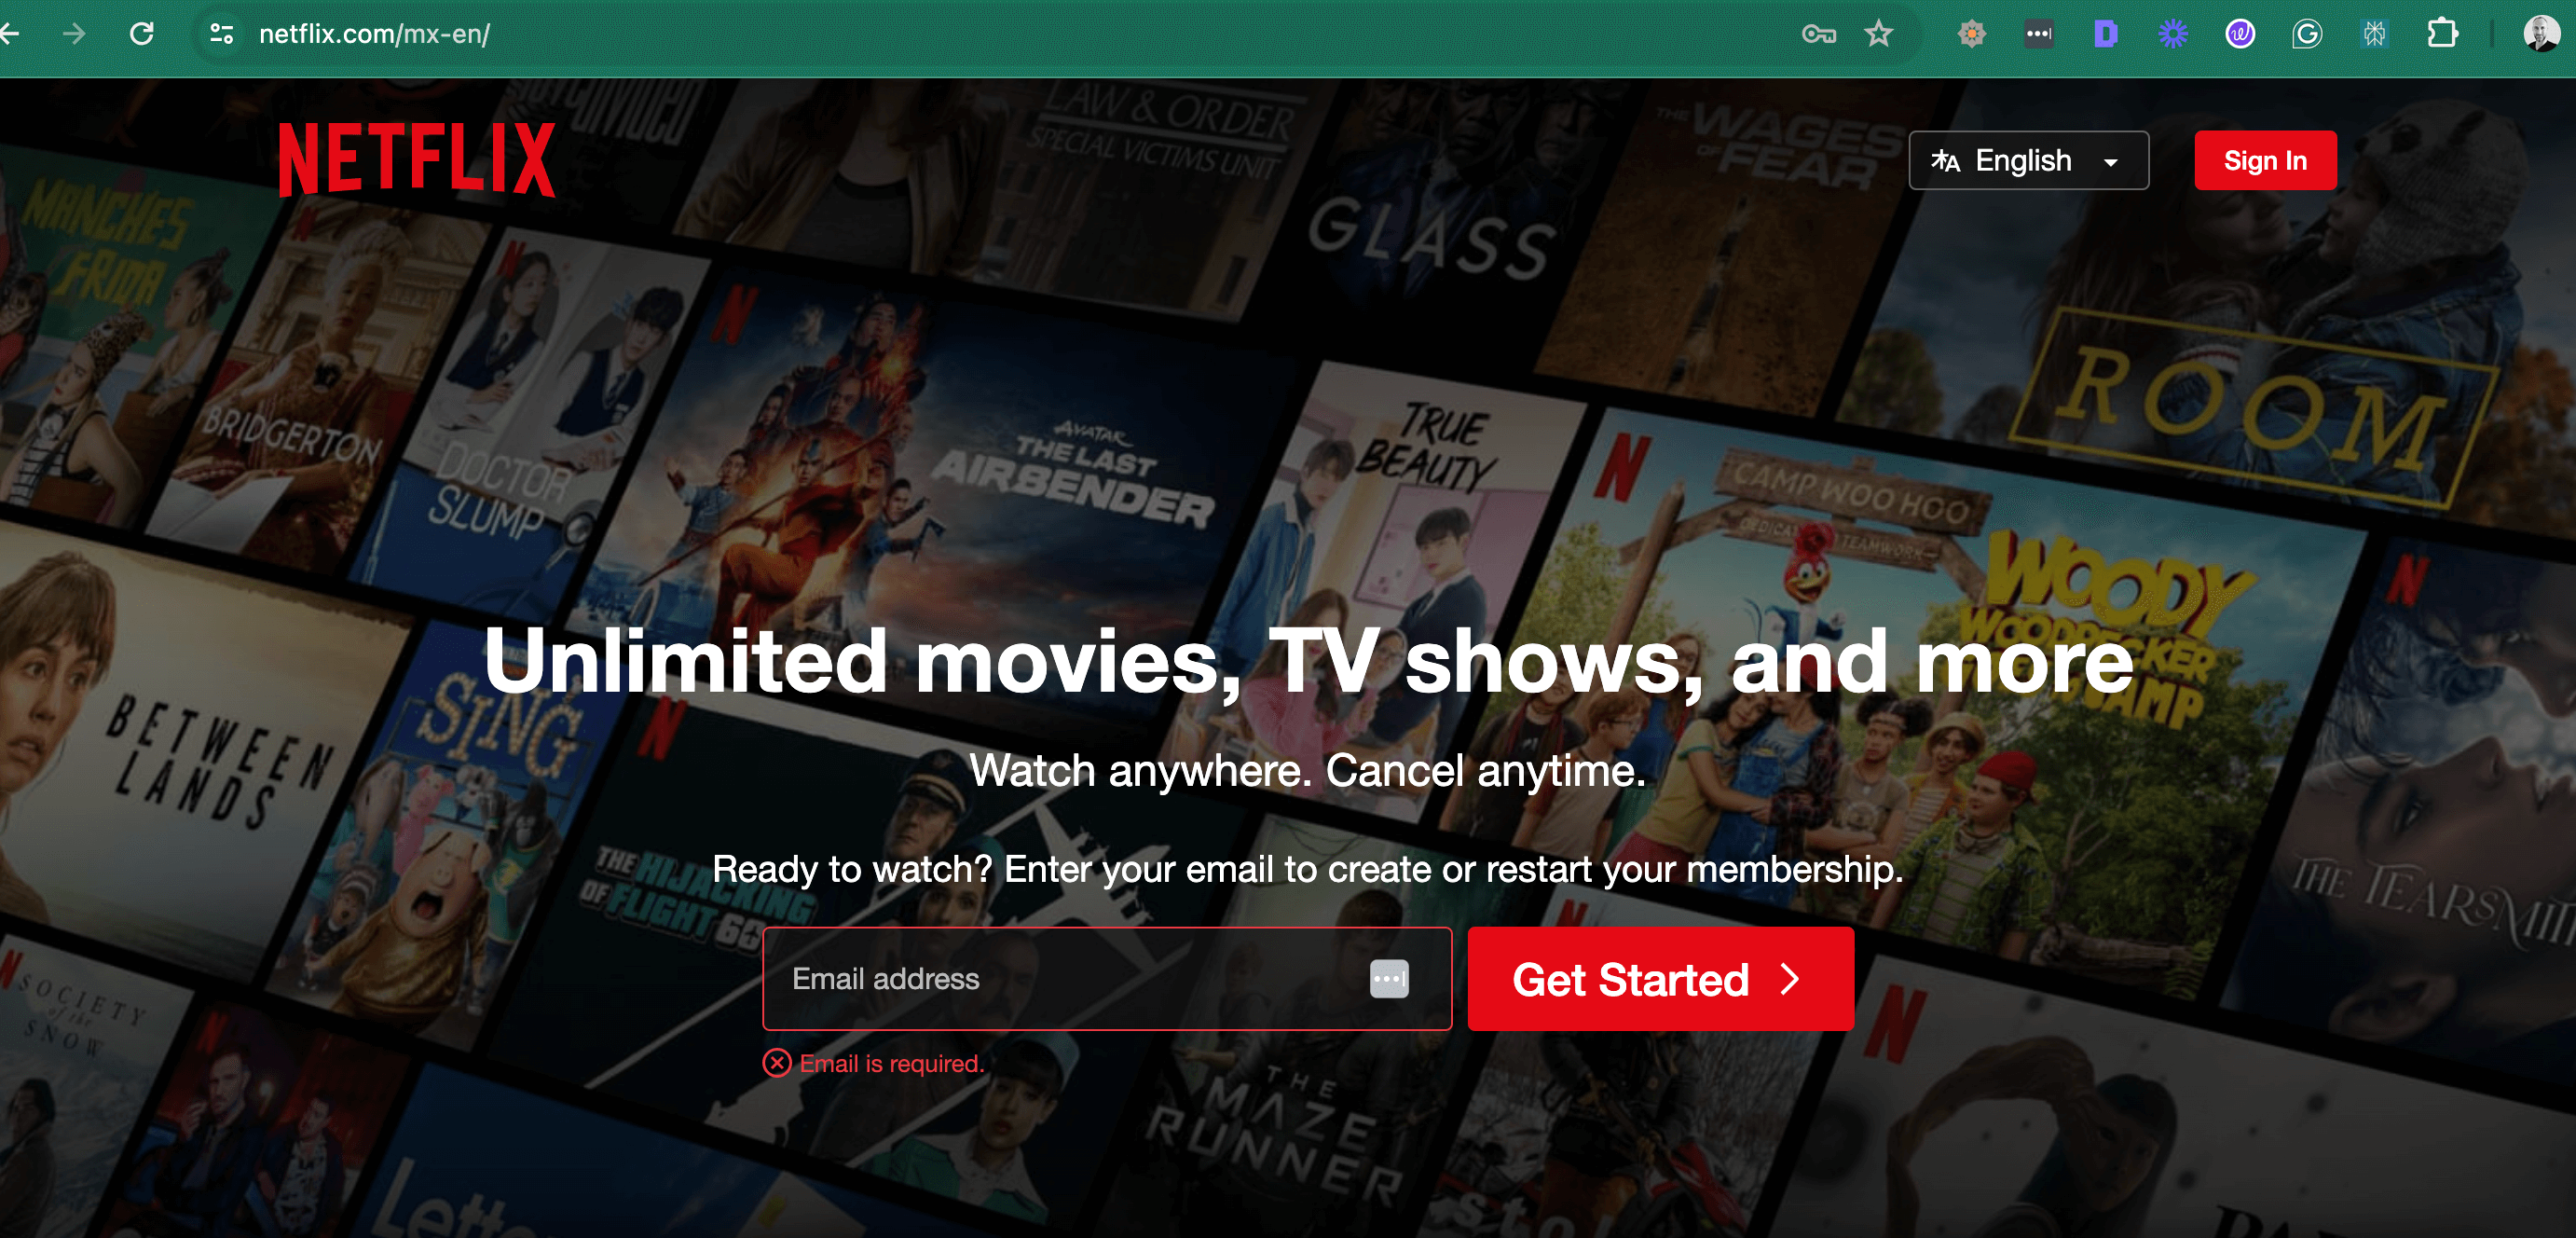 Netflix website showing URL structure